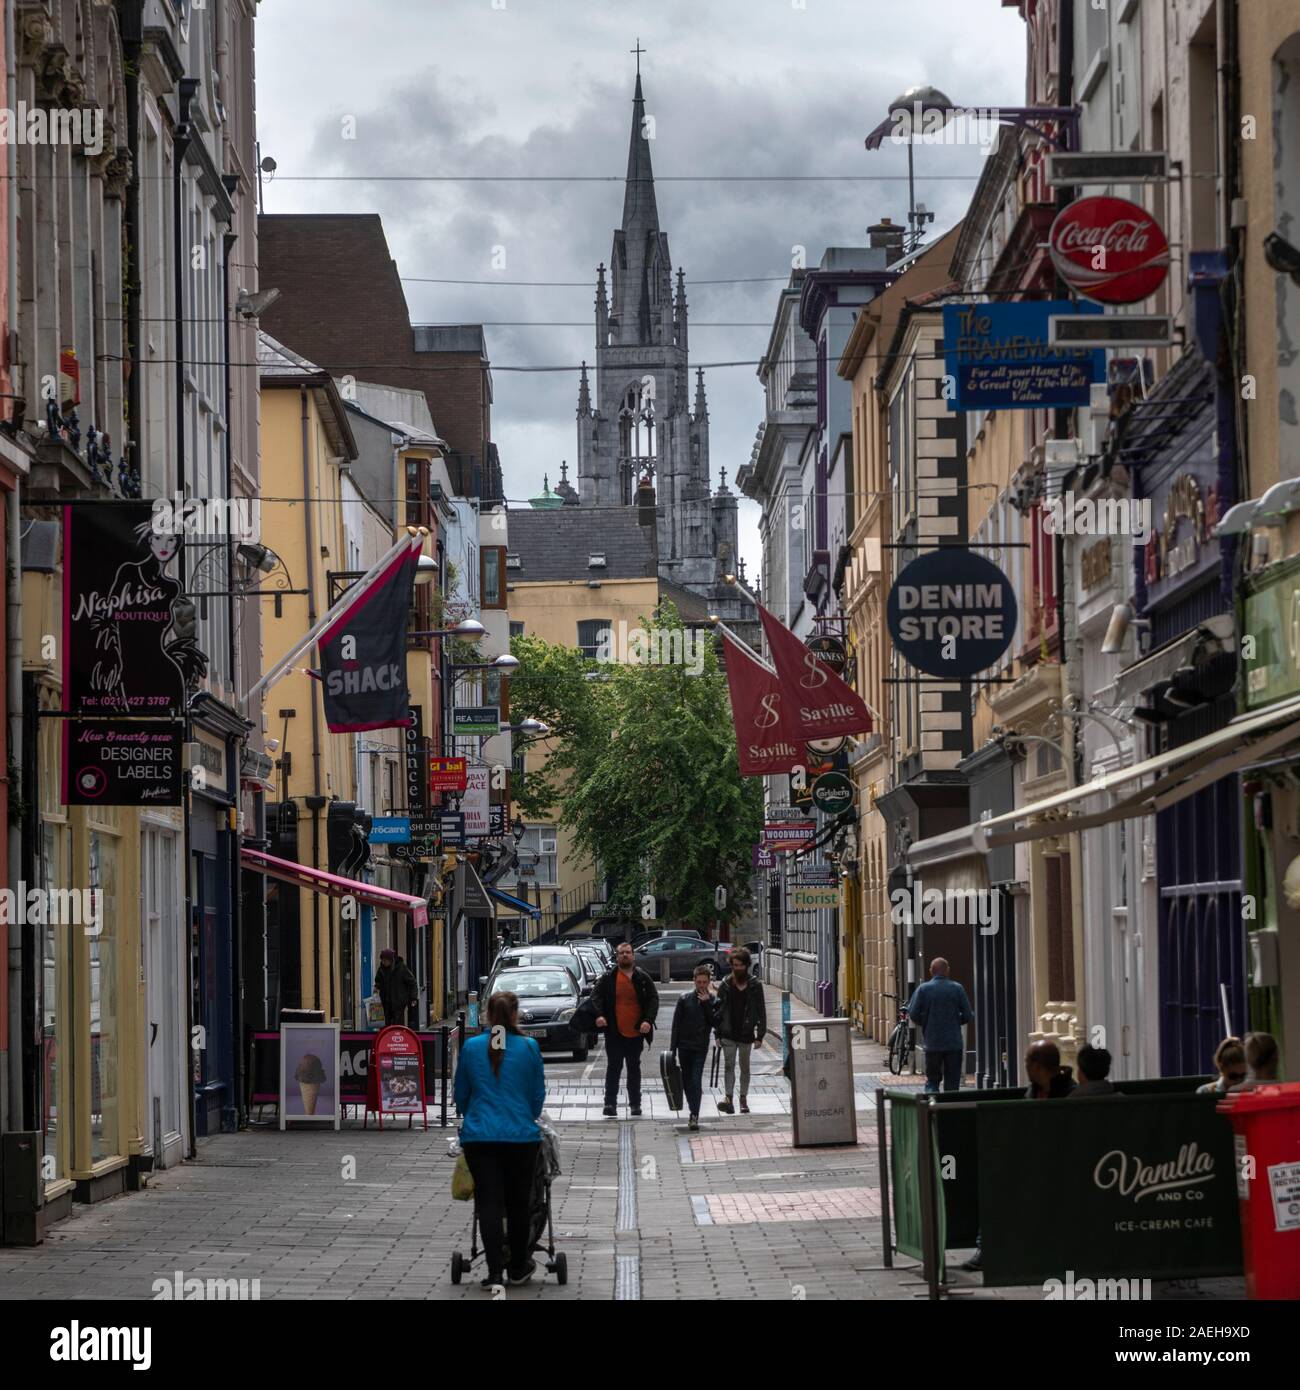 People walking on the street, City of Cork, County Cork, Ireland Stock Photo